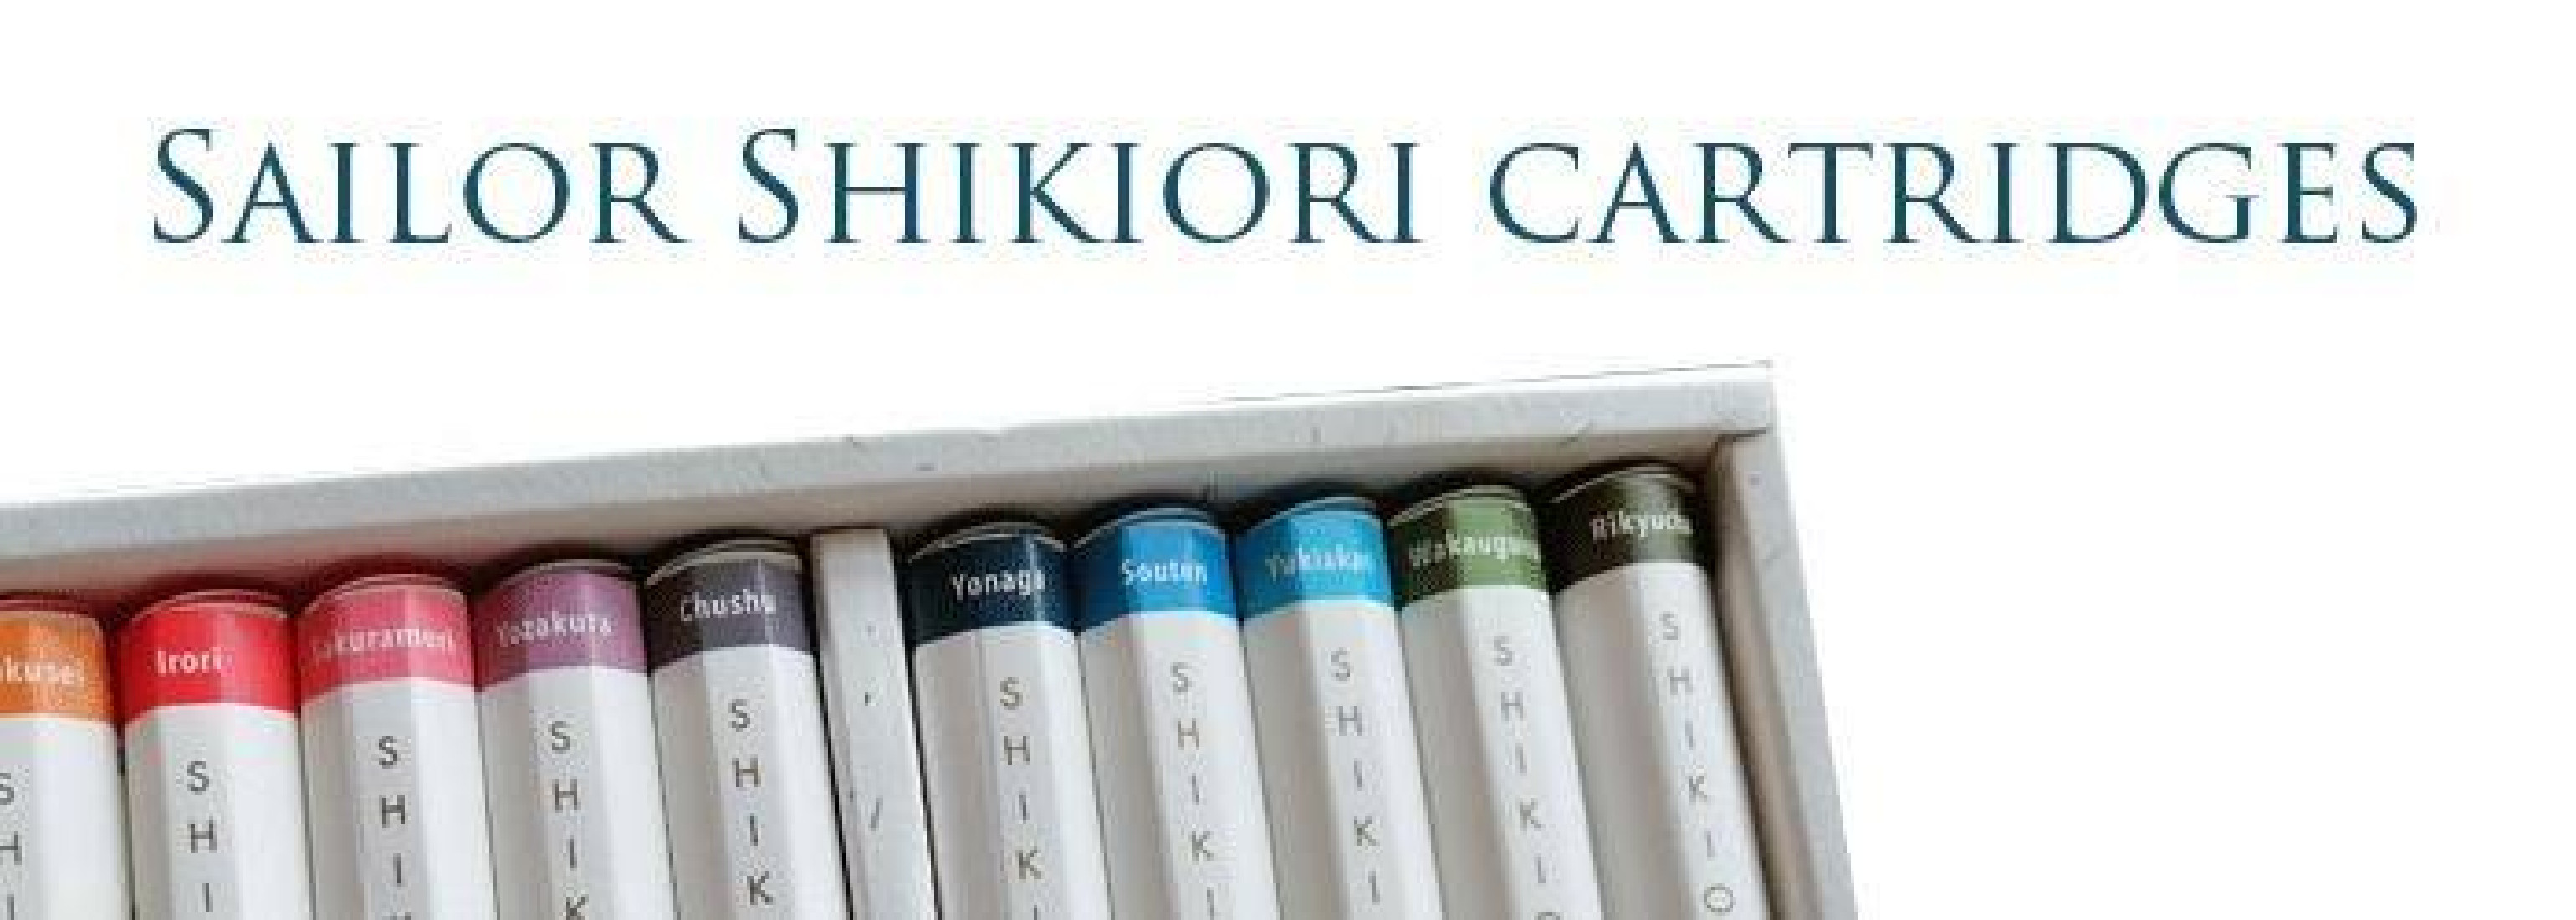 Sailor Shikiori ink cartidge four seasons (summer) 3pcs pack